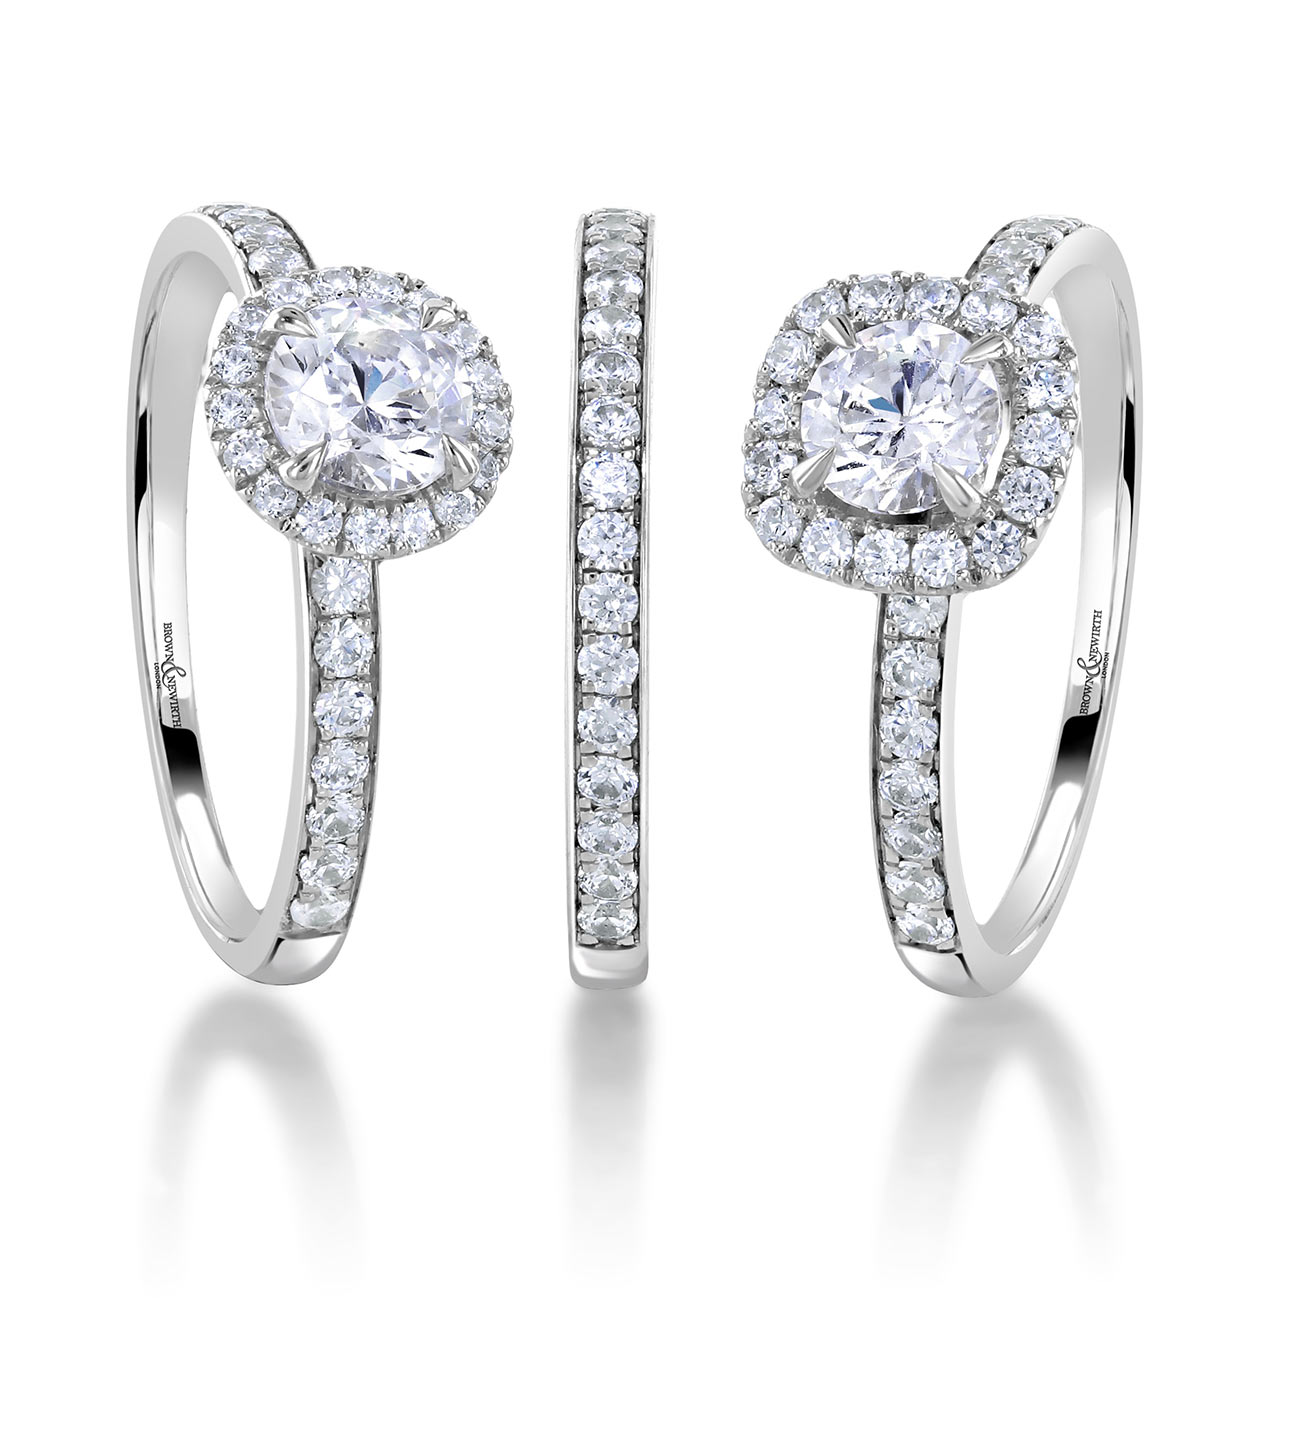 Drakes Jewellers Ring Feature Wed Wedding Cornwall Devon Bride1